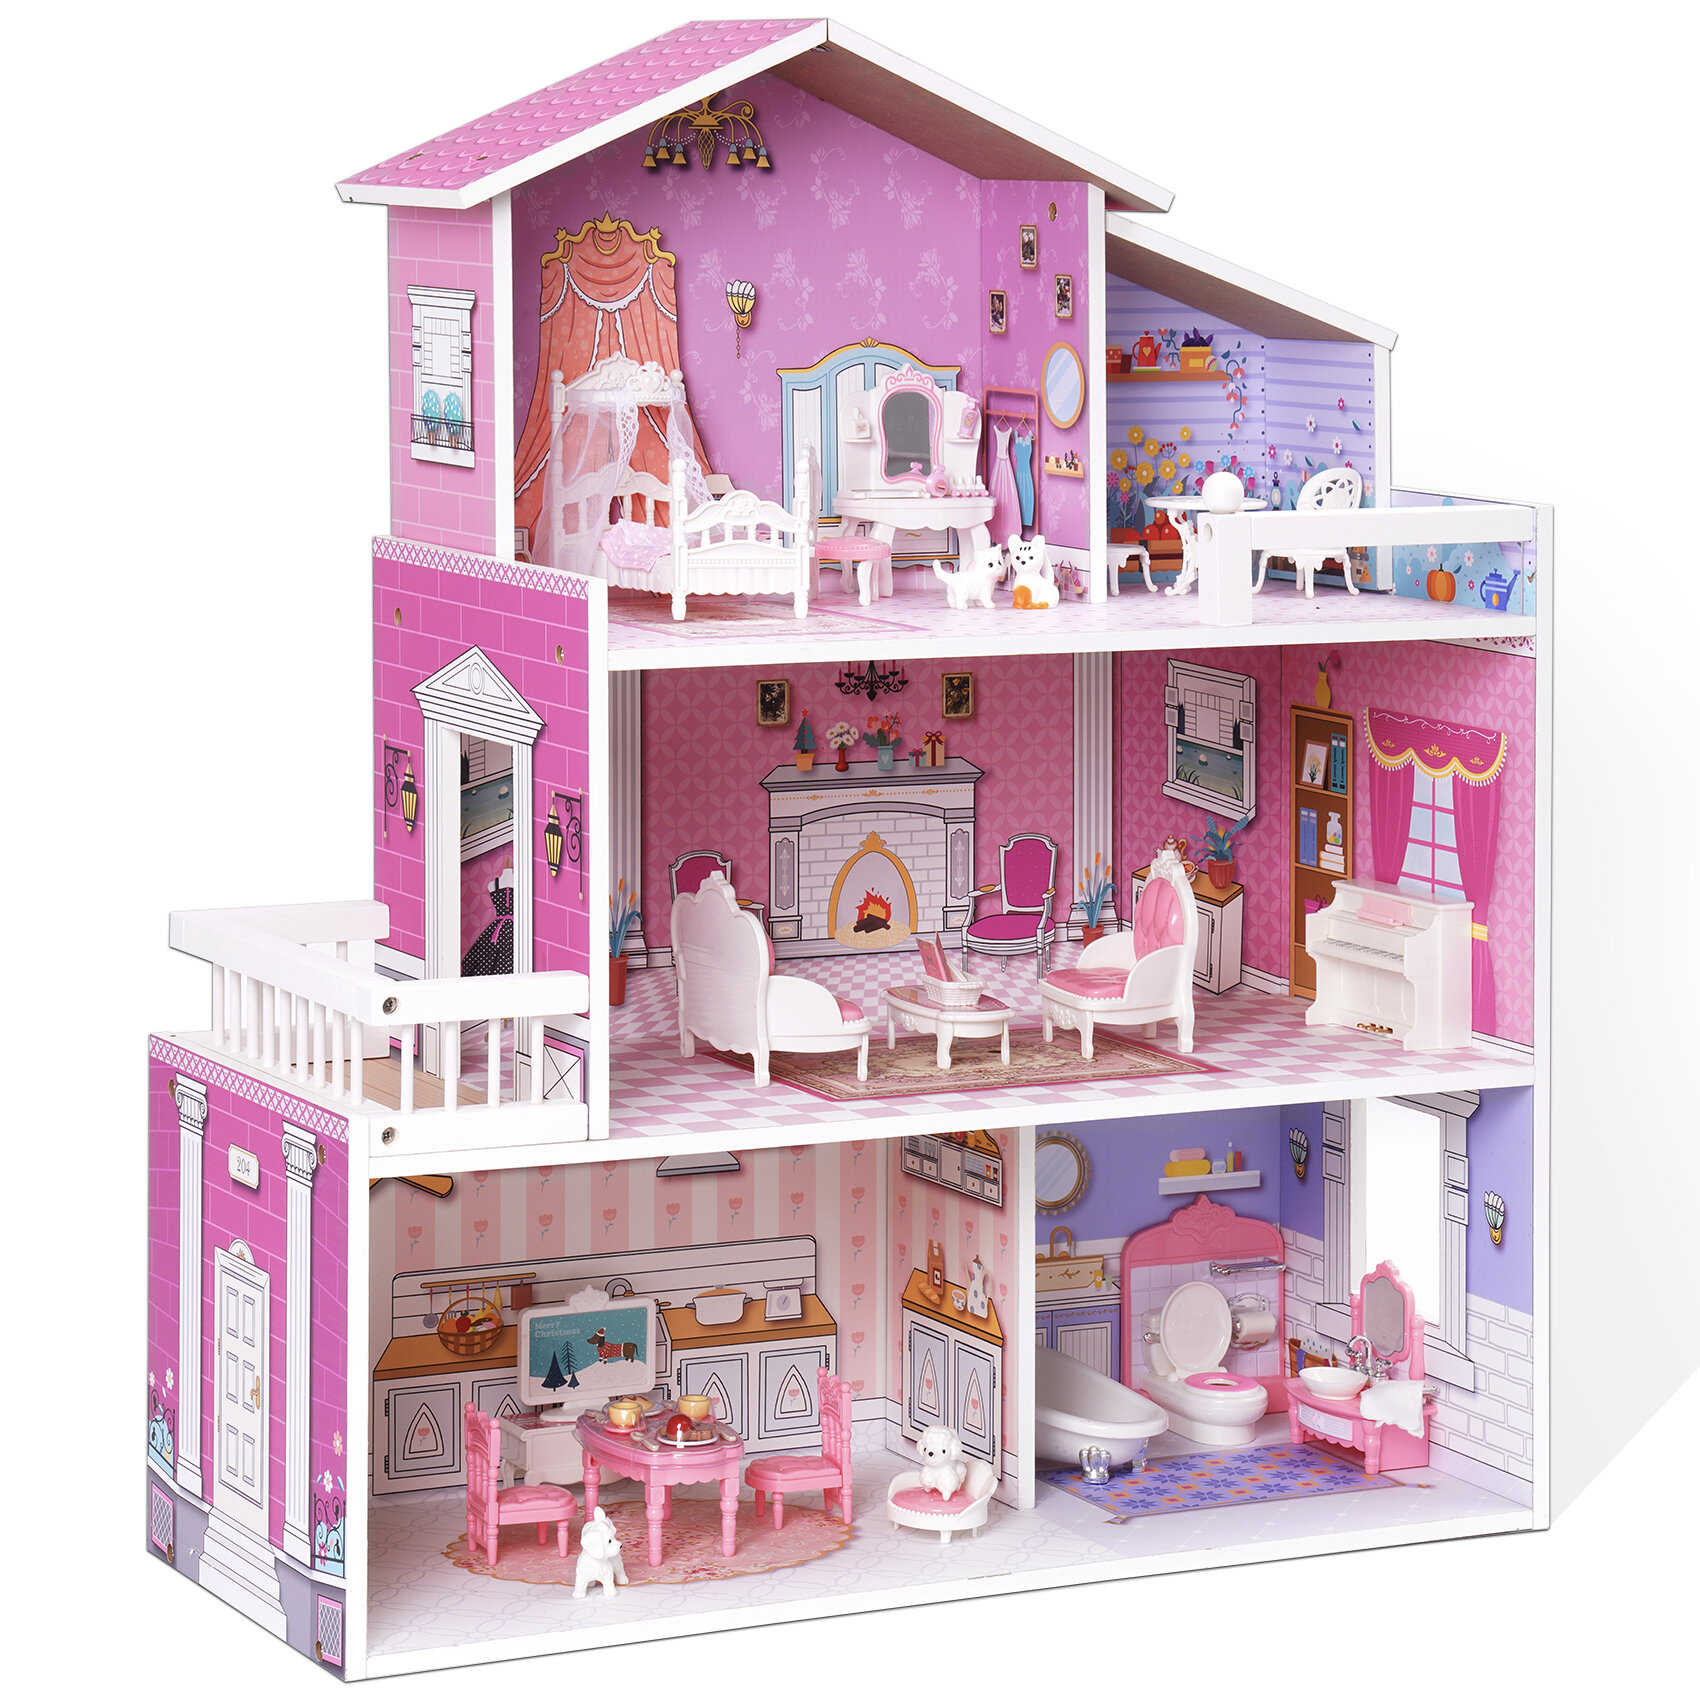 Dollhouse Miniature Retro Simulation Furniture Model Toys for Doll House De xz 